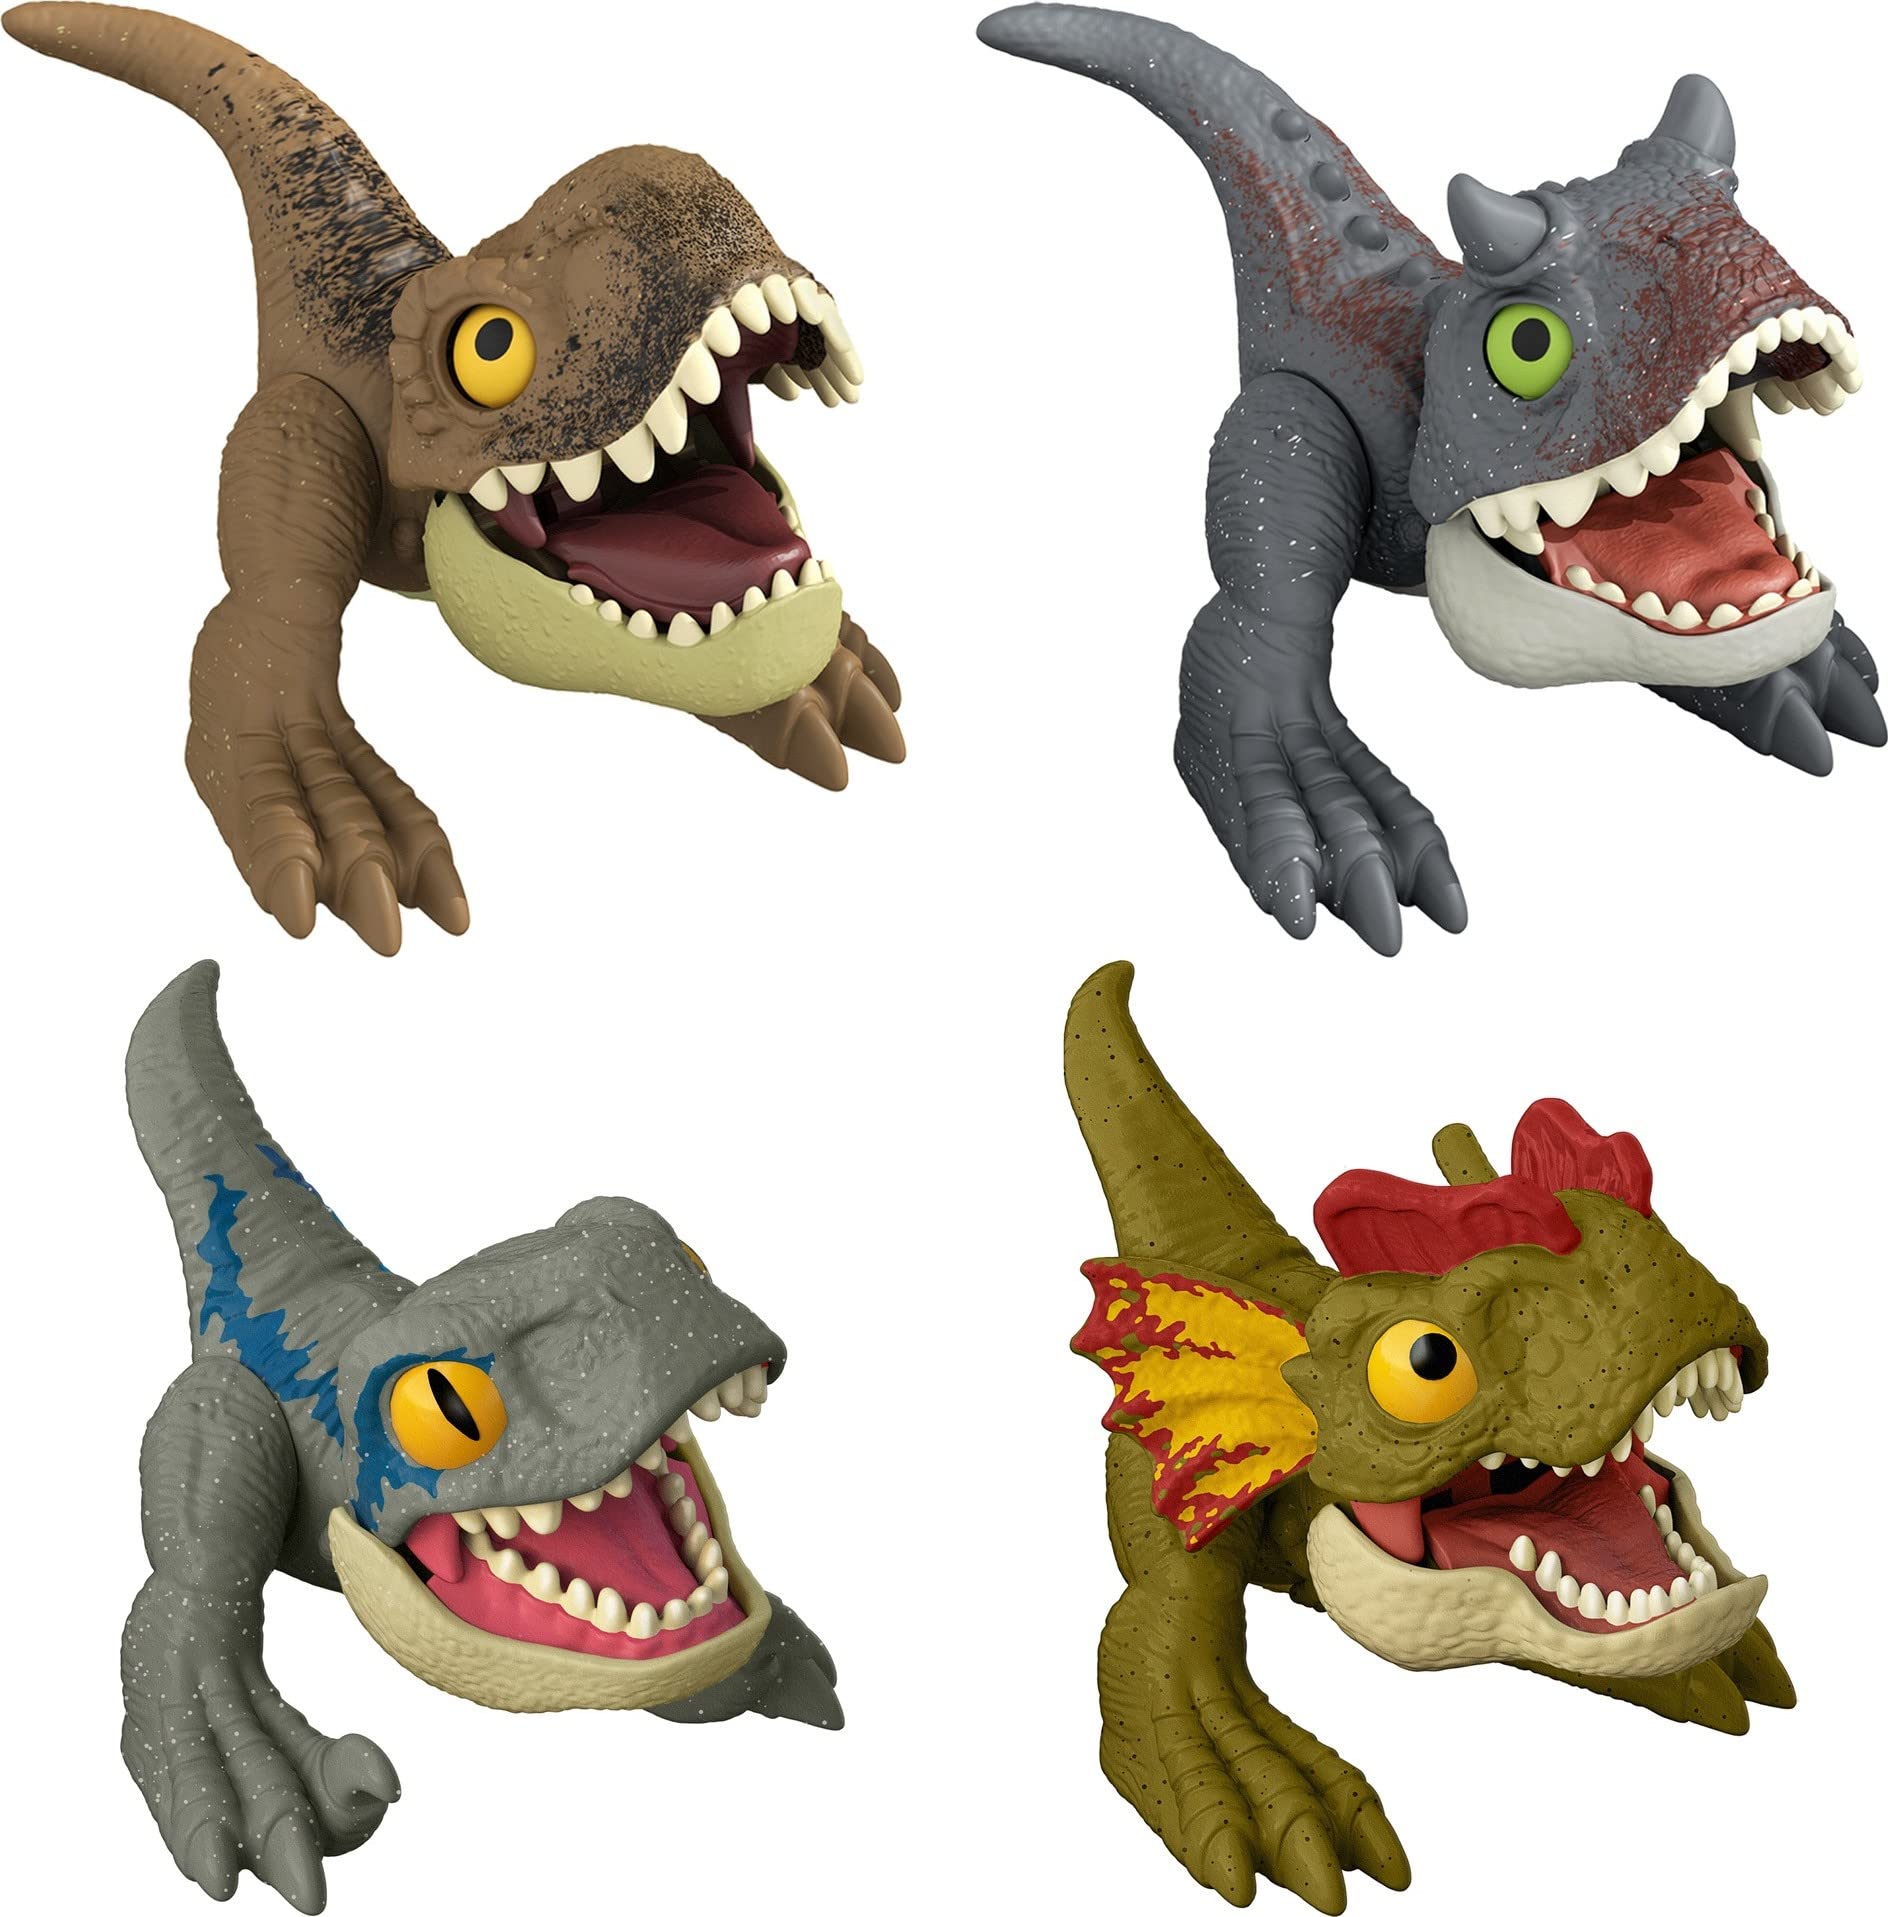 Jurassic World Dominion Uncaged Wild Pop Ups Dinosaur Toys, 4 Pack Collectible Figures - $10.31 - Amazon